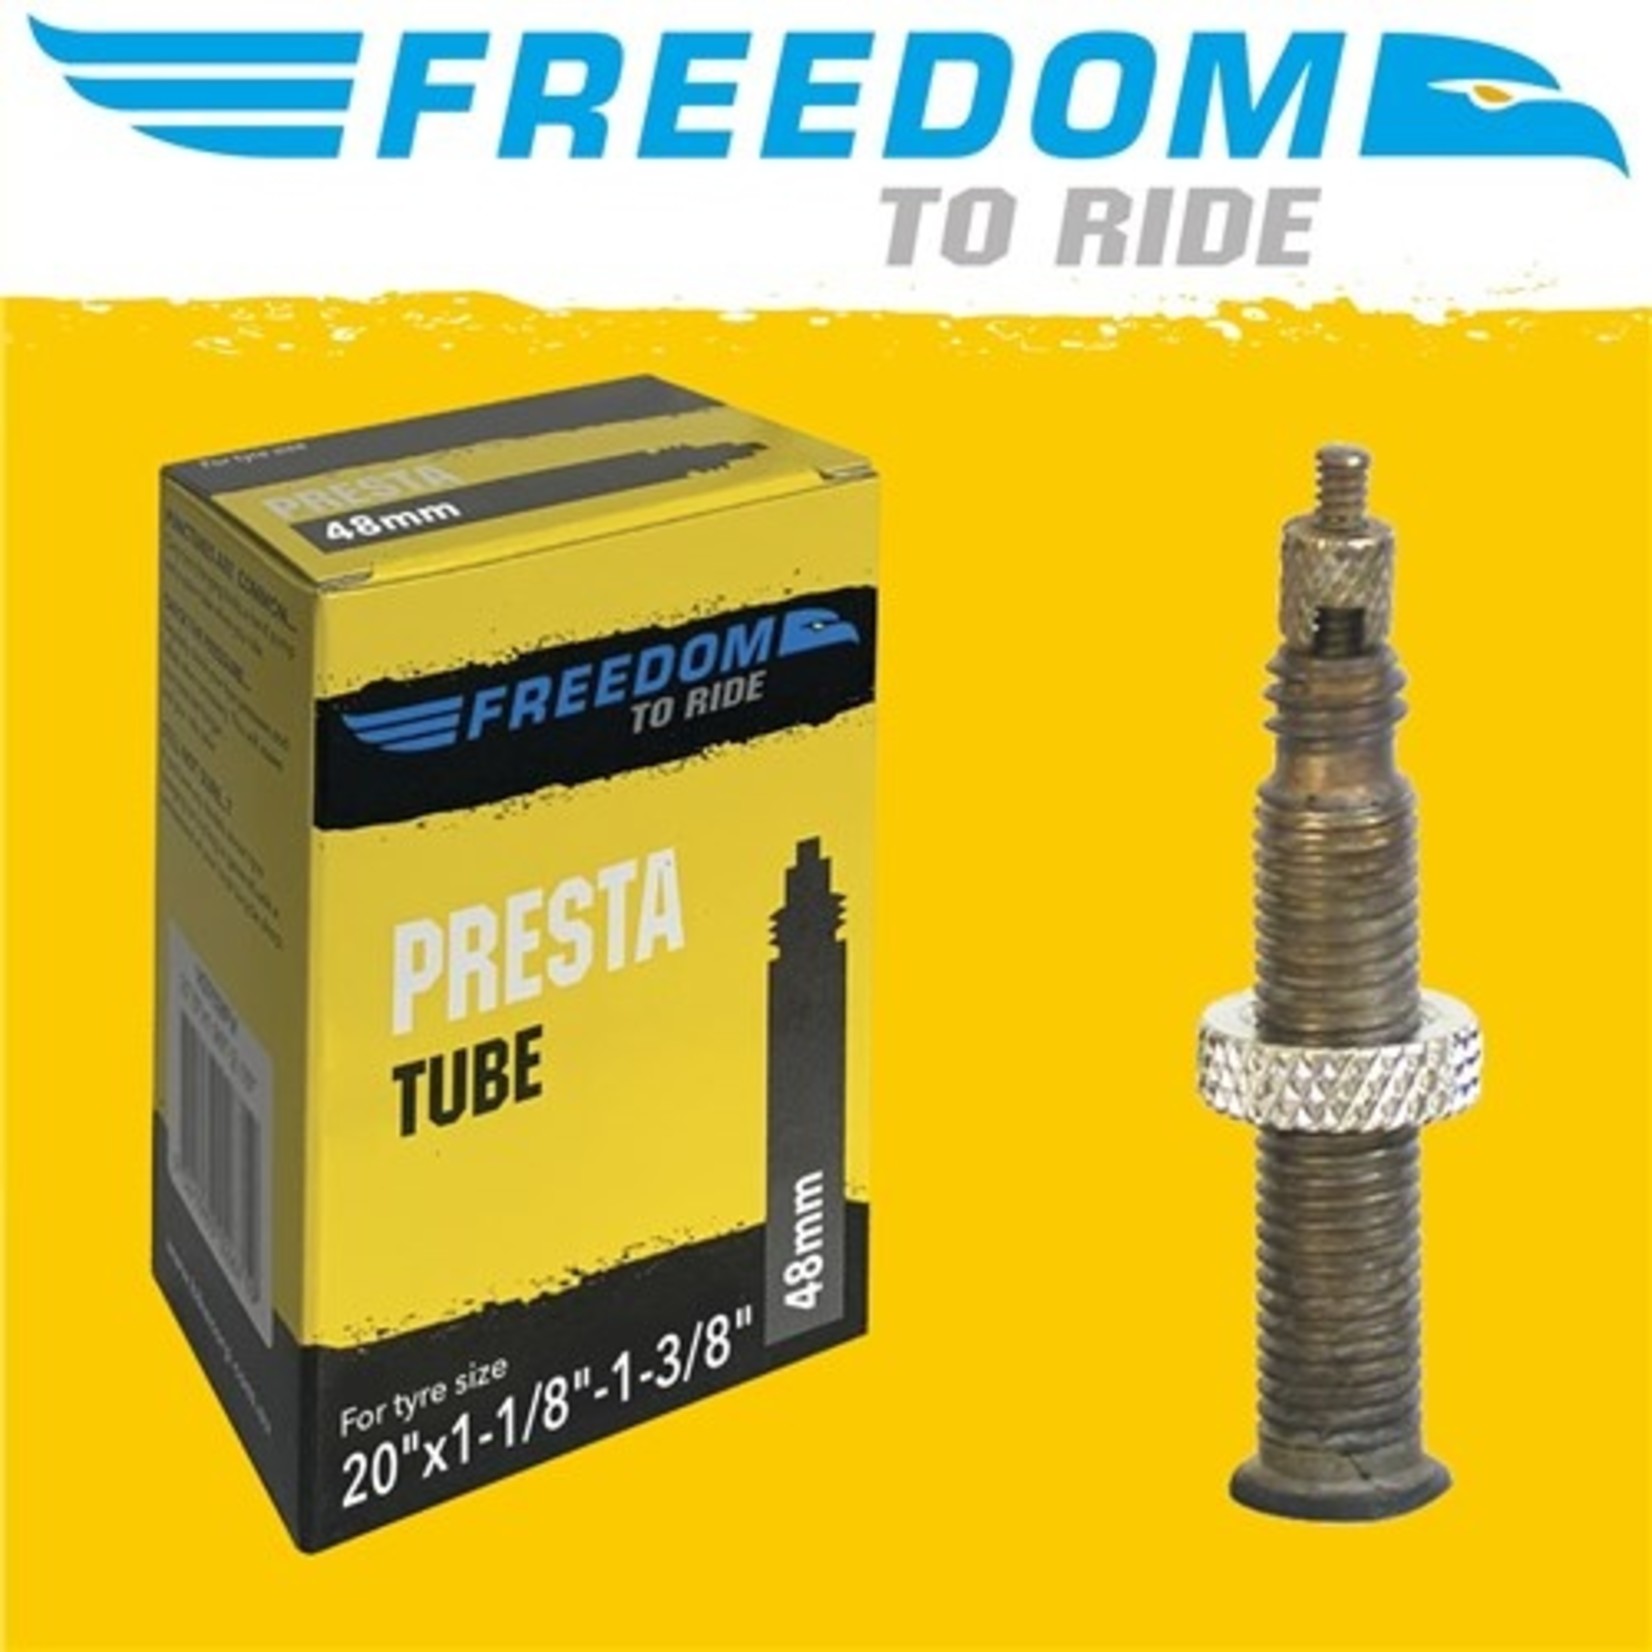 Freedom Freedom Bike Tube - 20" X 1-1/8-3/8" - Presta Valve - 48mm